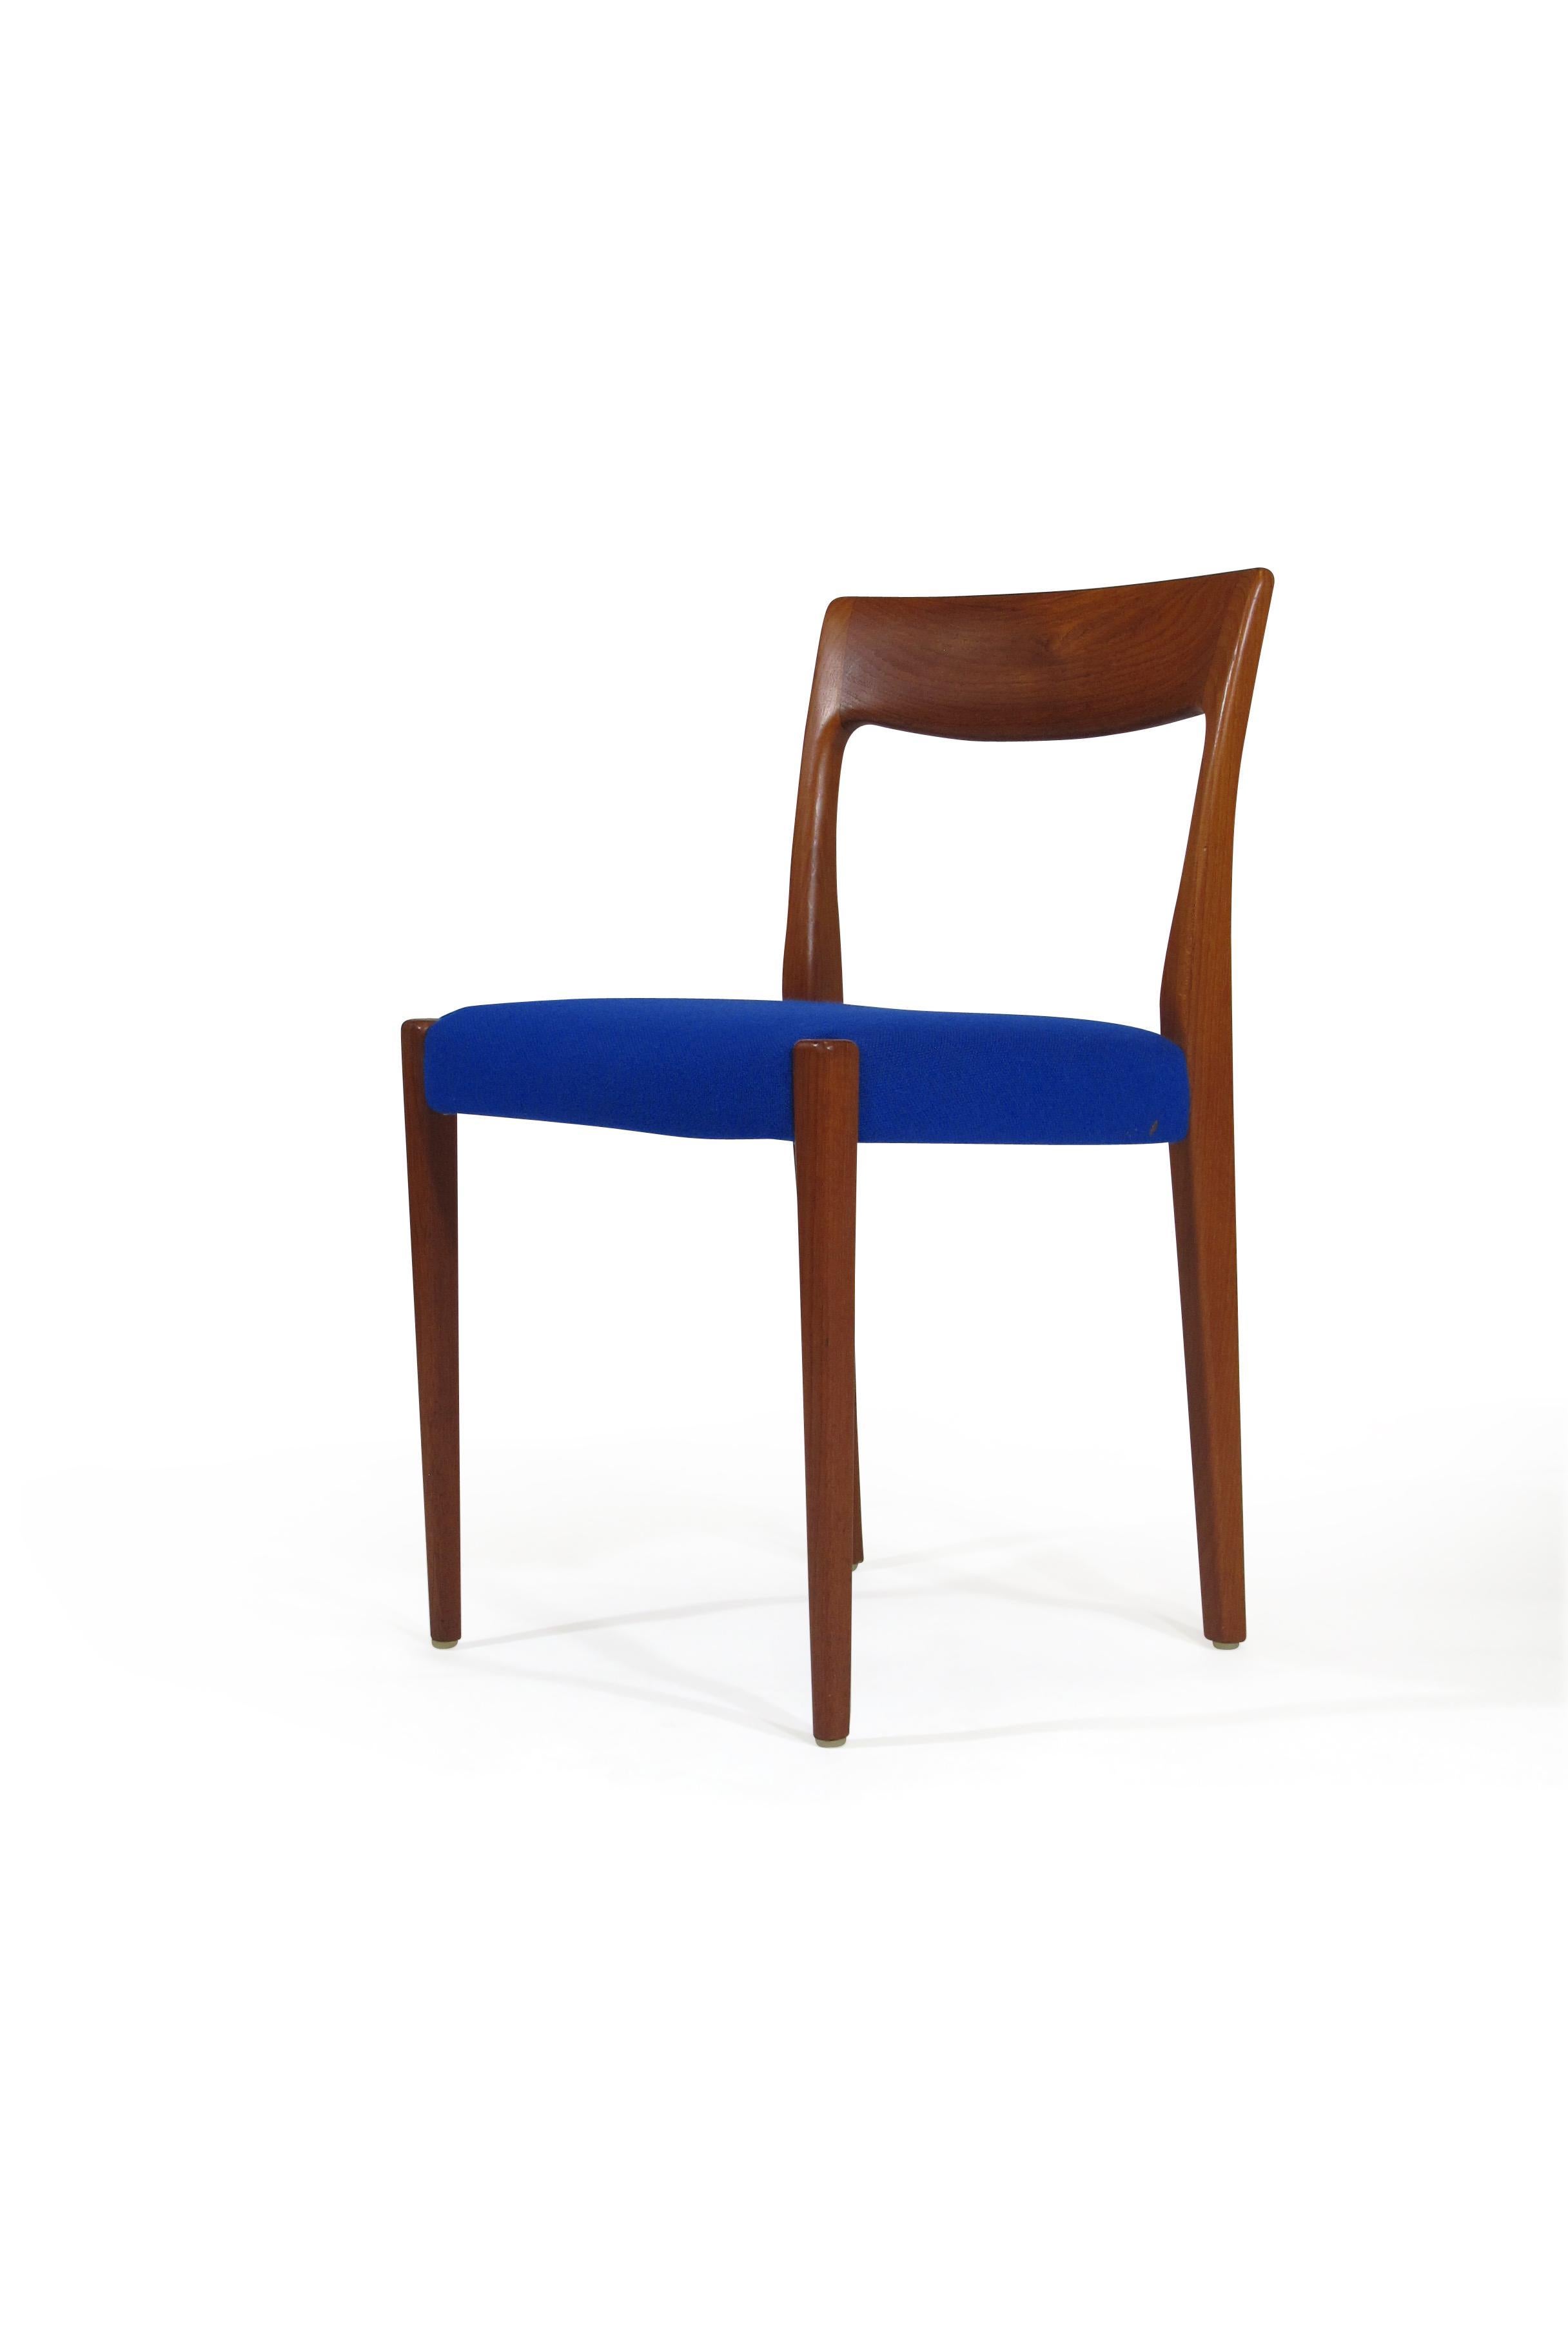 Swedish Midcentury Danish Teak Dining Chairs, Set of 6